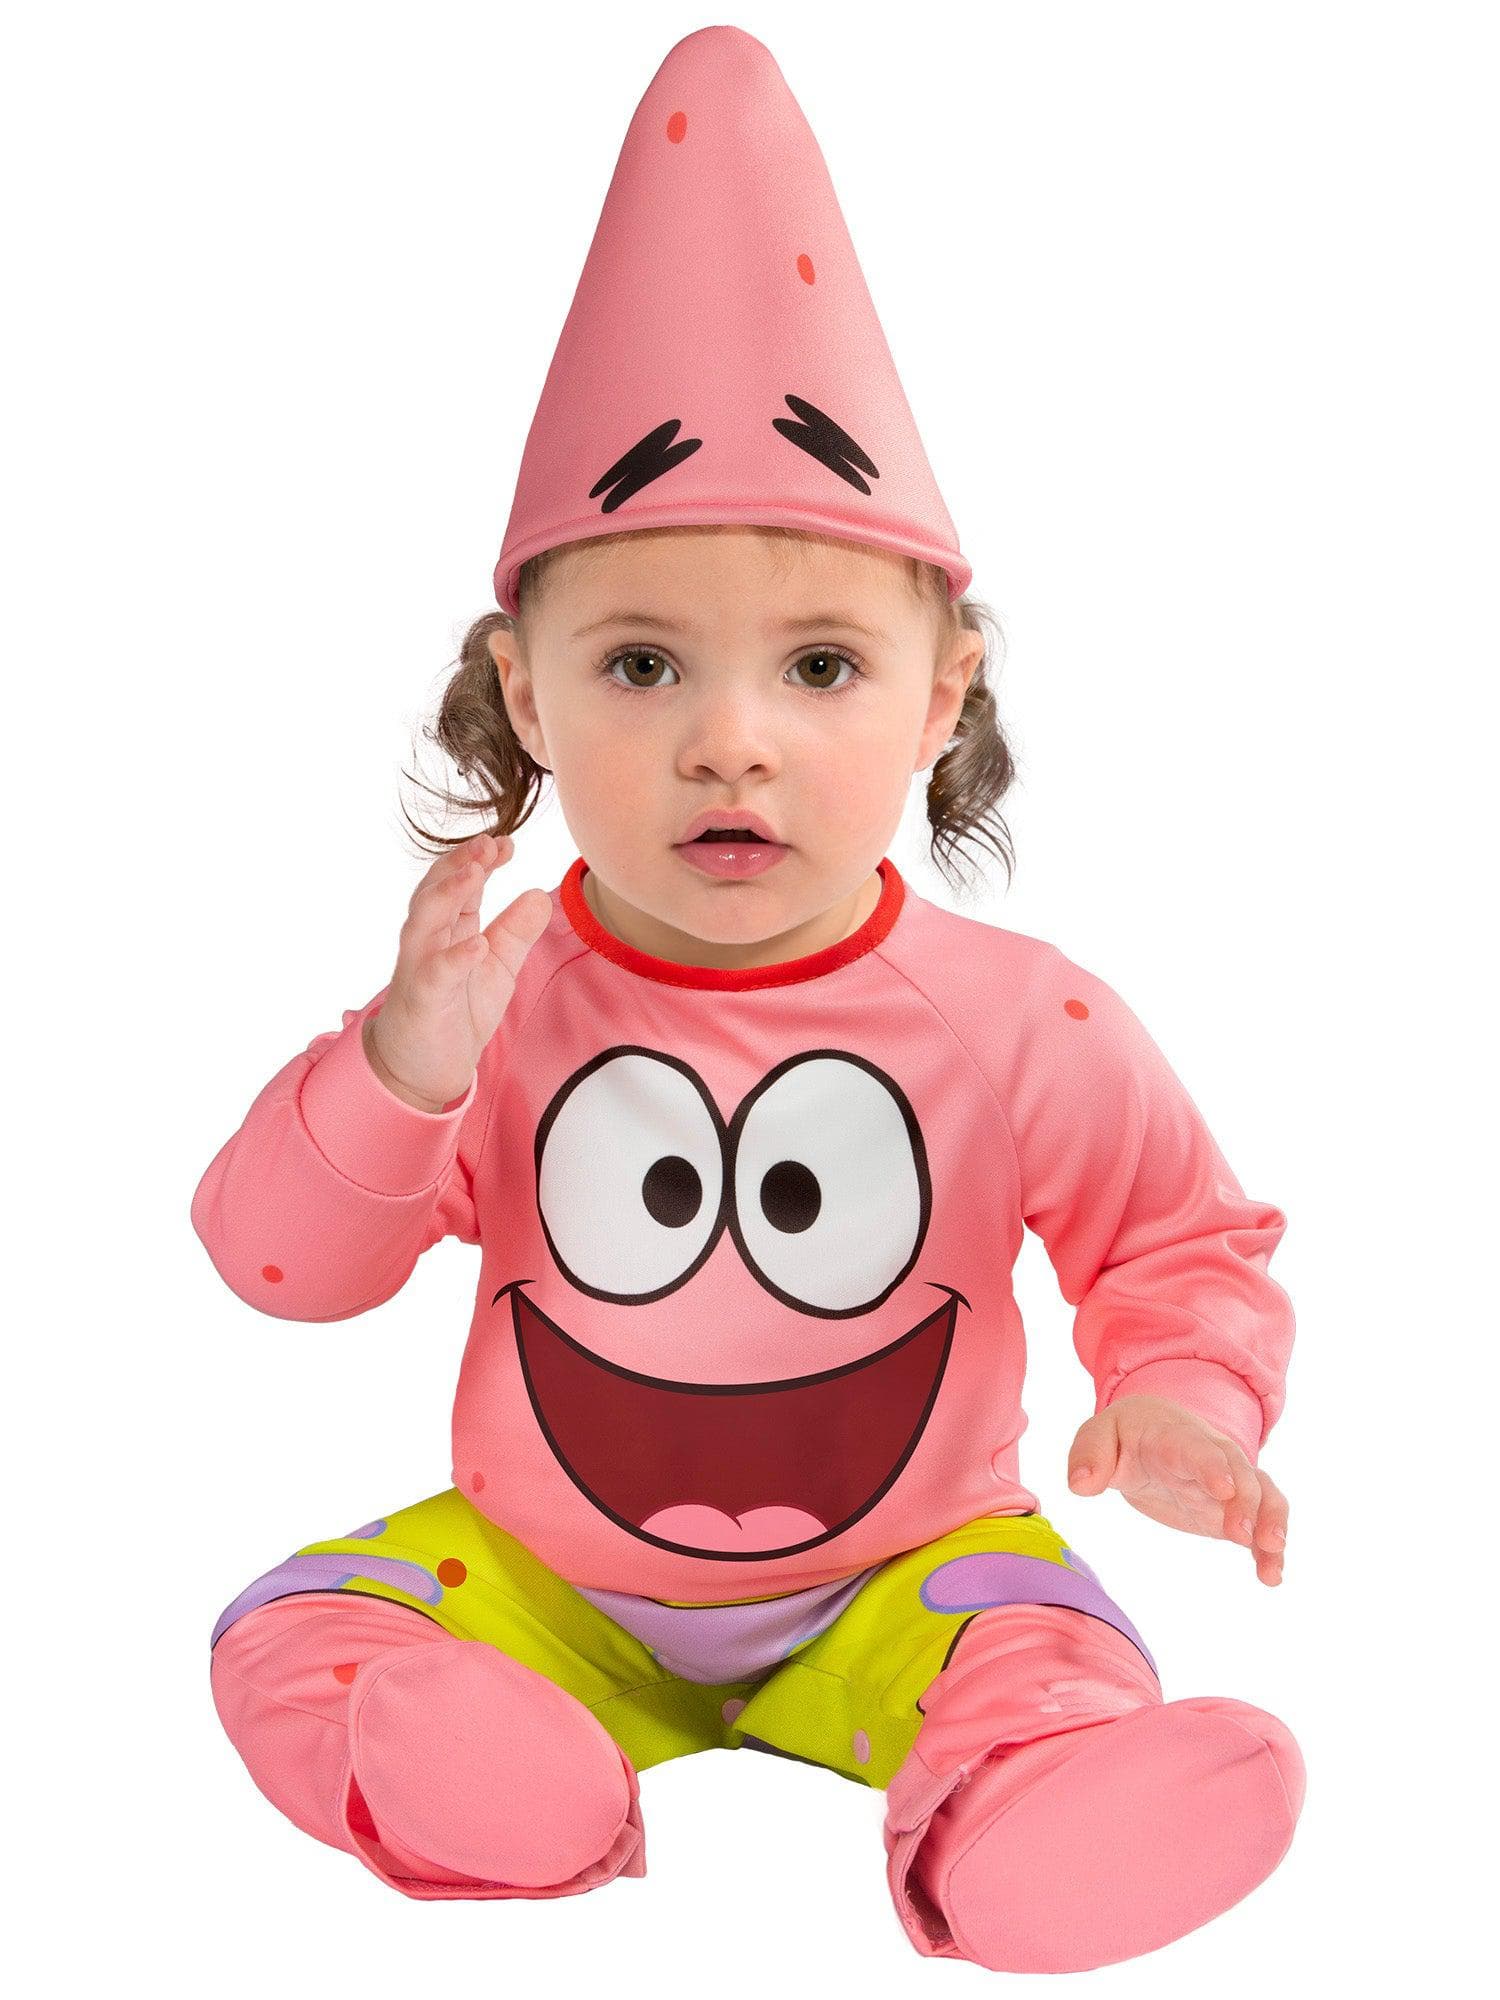 SpongeBob SquarePants Patrick Star Baby Costume - costumes.com